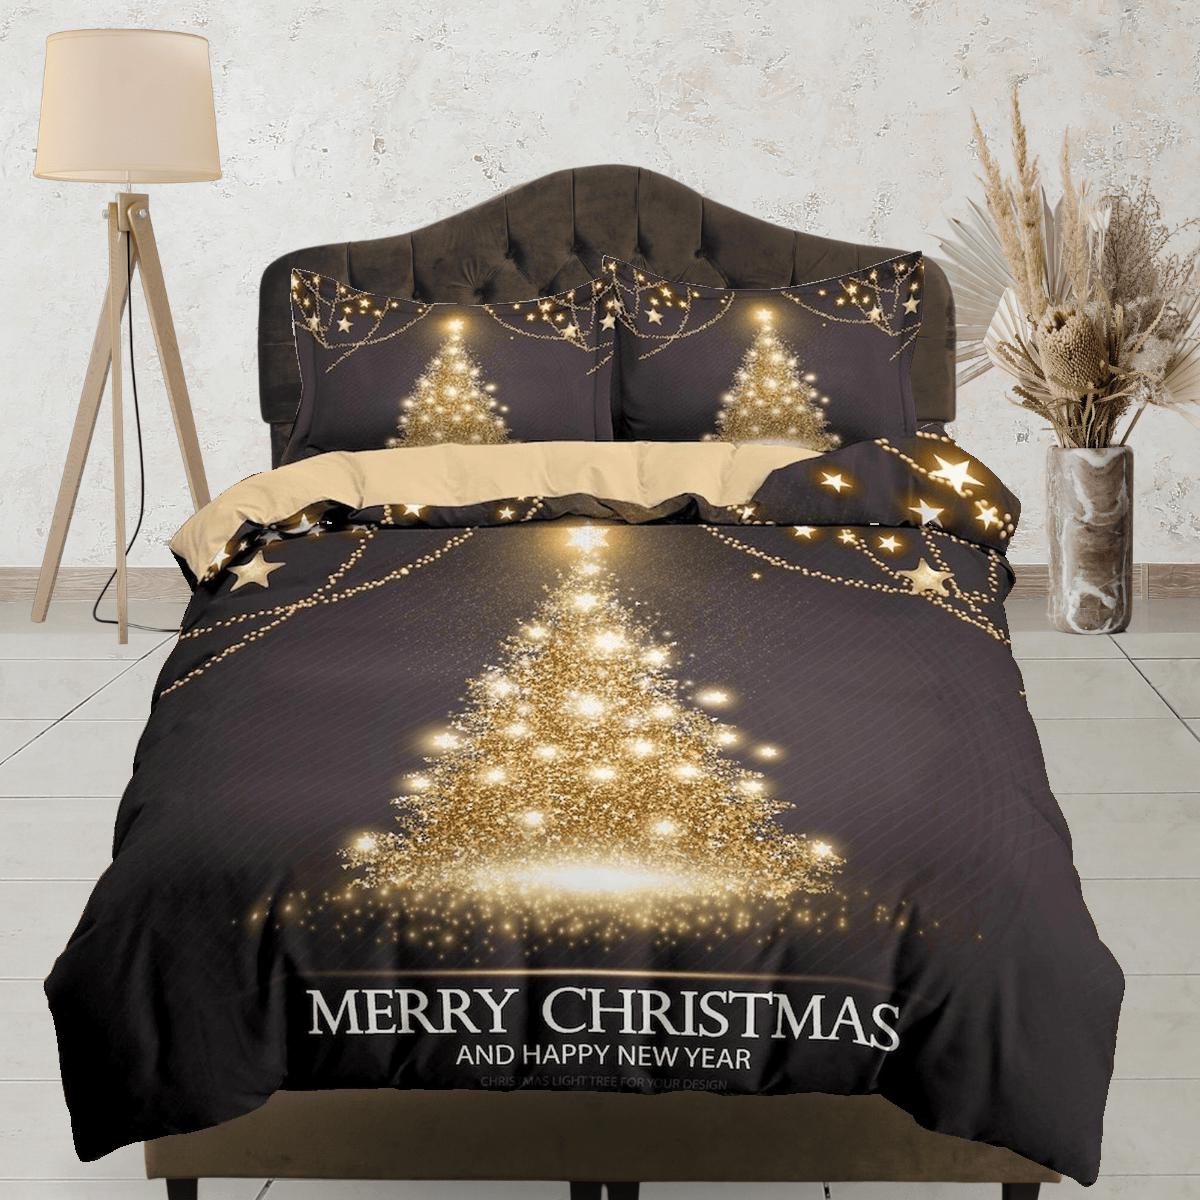 daintyduvet Golden Christmas tree bedding & pillowcase holiday gift duvet cover king queen full twin toddler bedding baby Christmas farmhouse decor